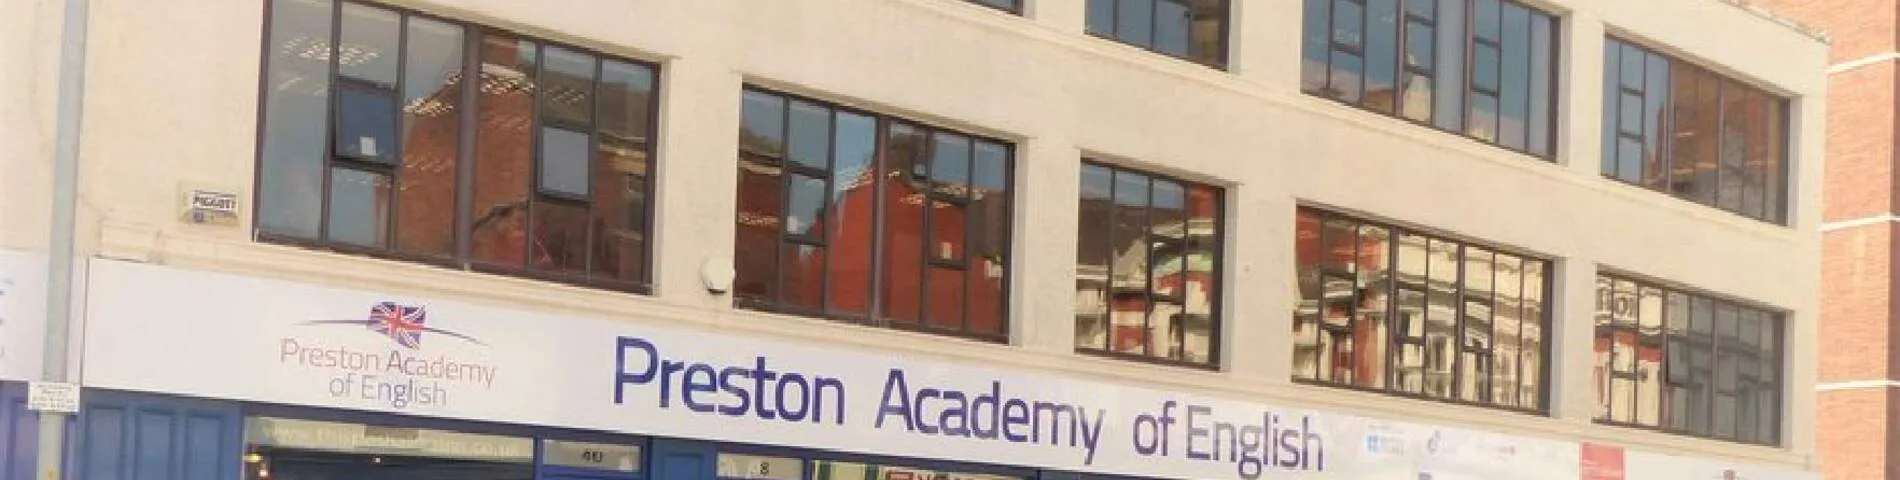 Preston Academy of English picture 1